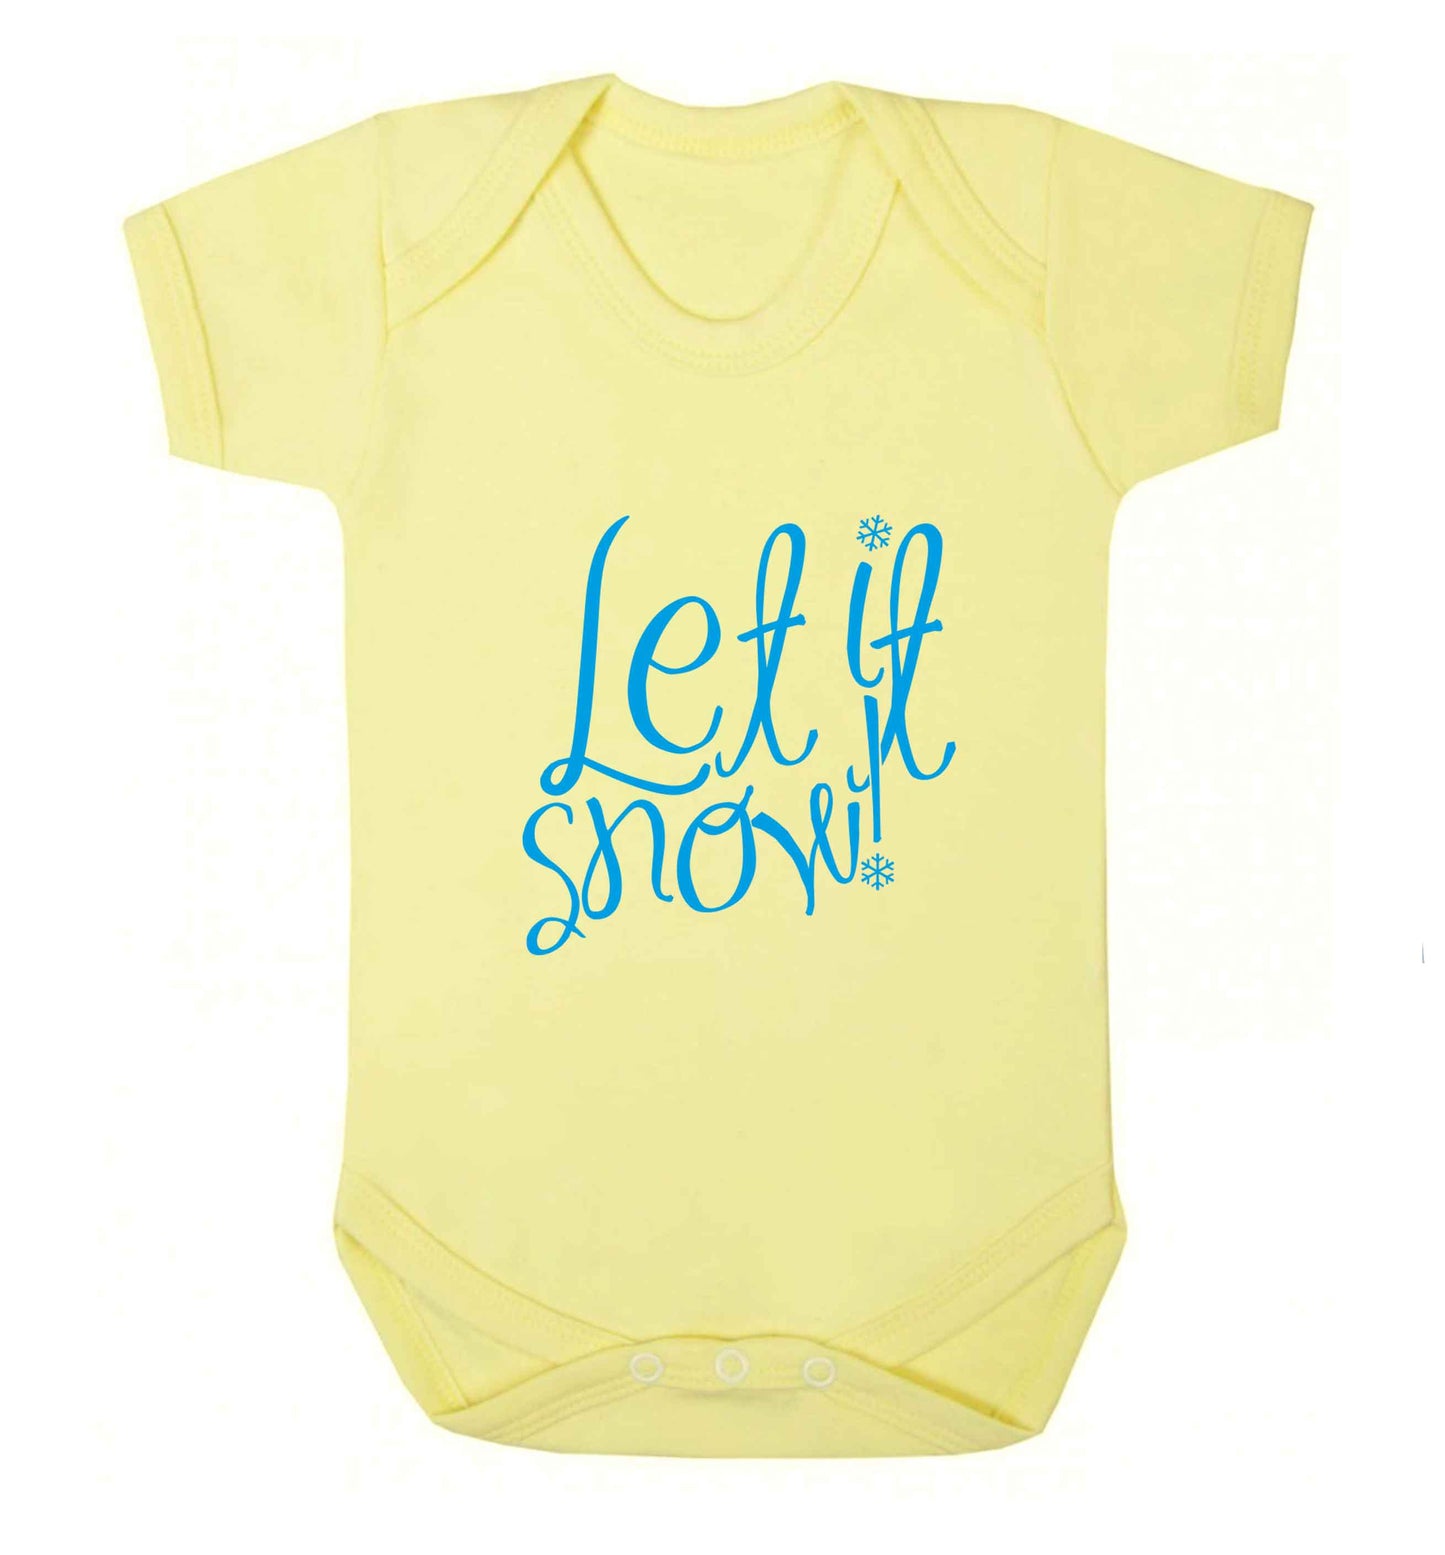 Let it snow baby vest pale yellow 18-24 months